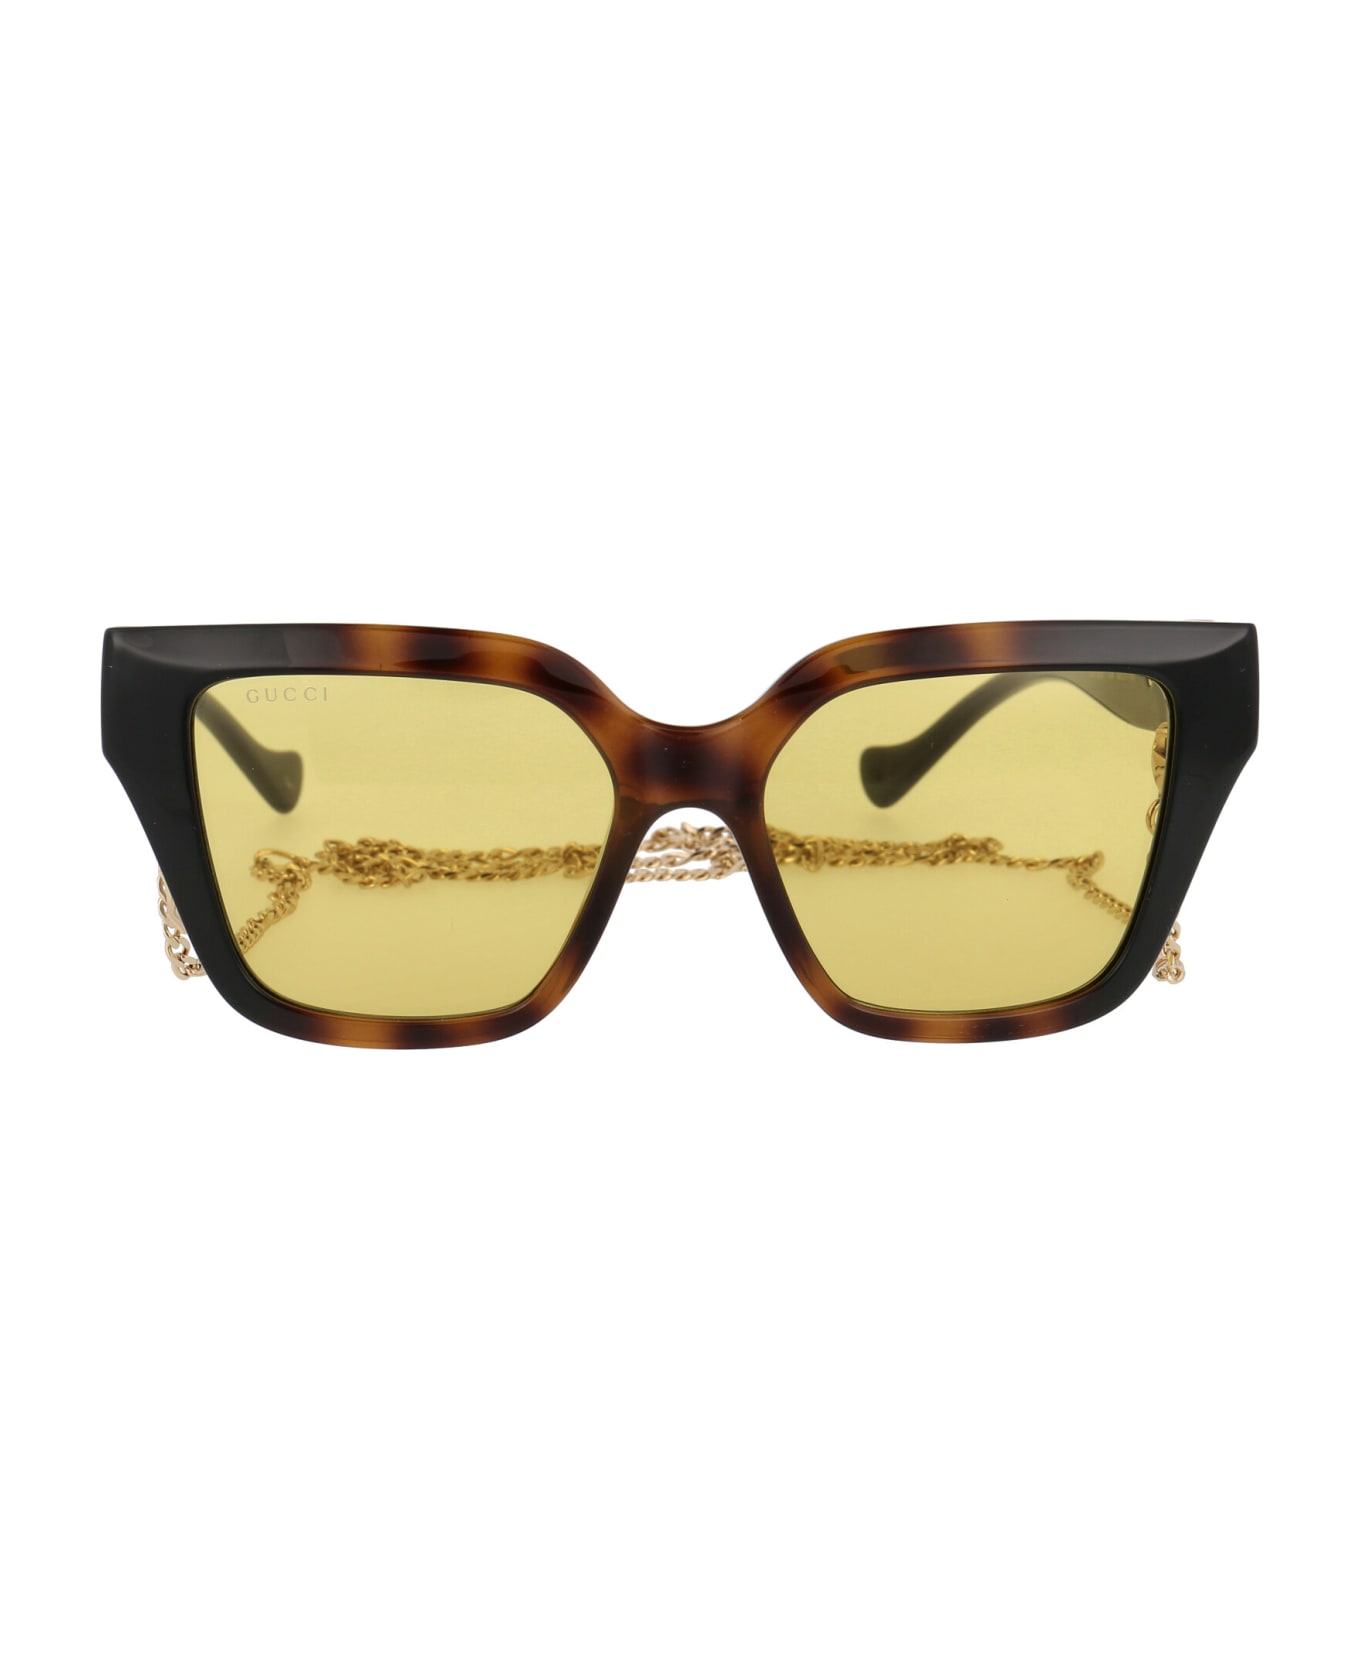 Gucci Eyewear Gg1023s Sunglasses - 004 HAVANA BLACK YELLOW サングラス